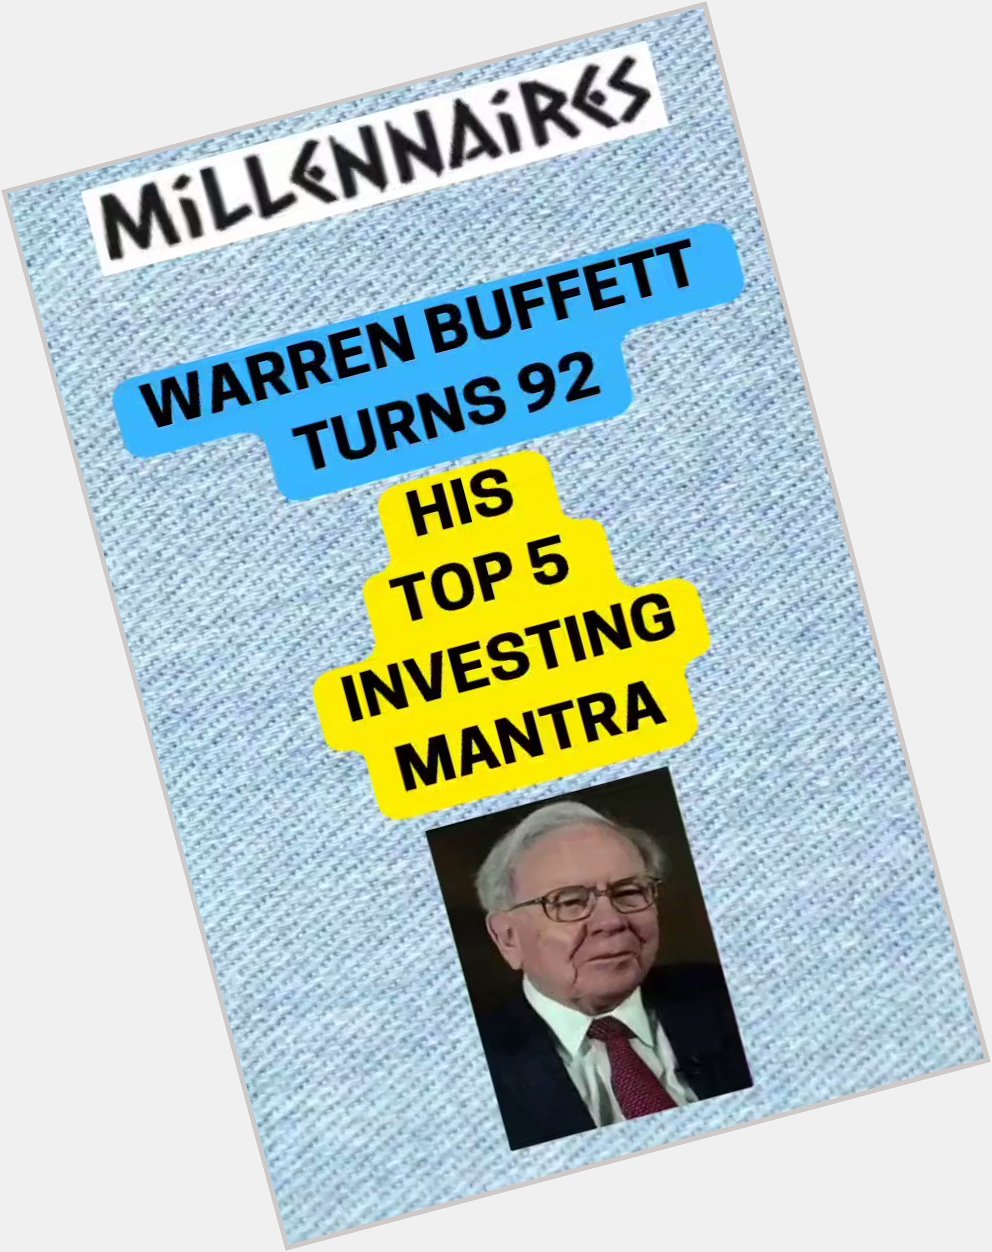 Happy birthday Warren Buffett!     